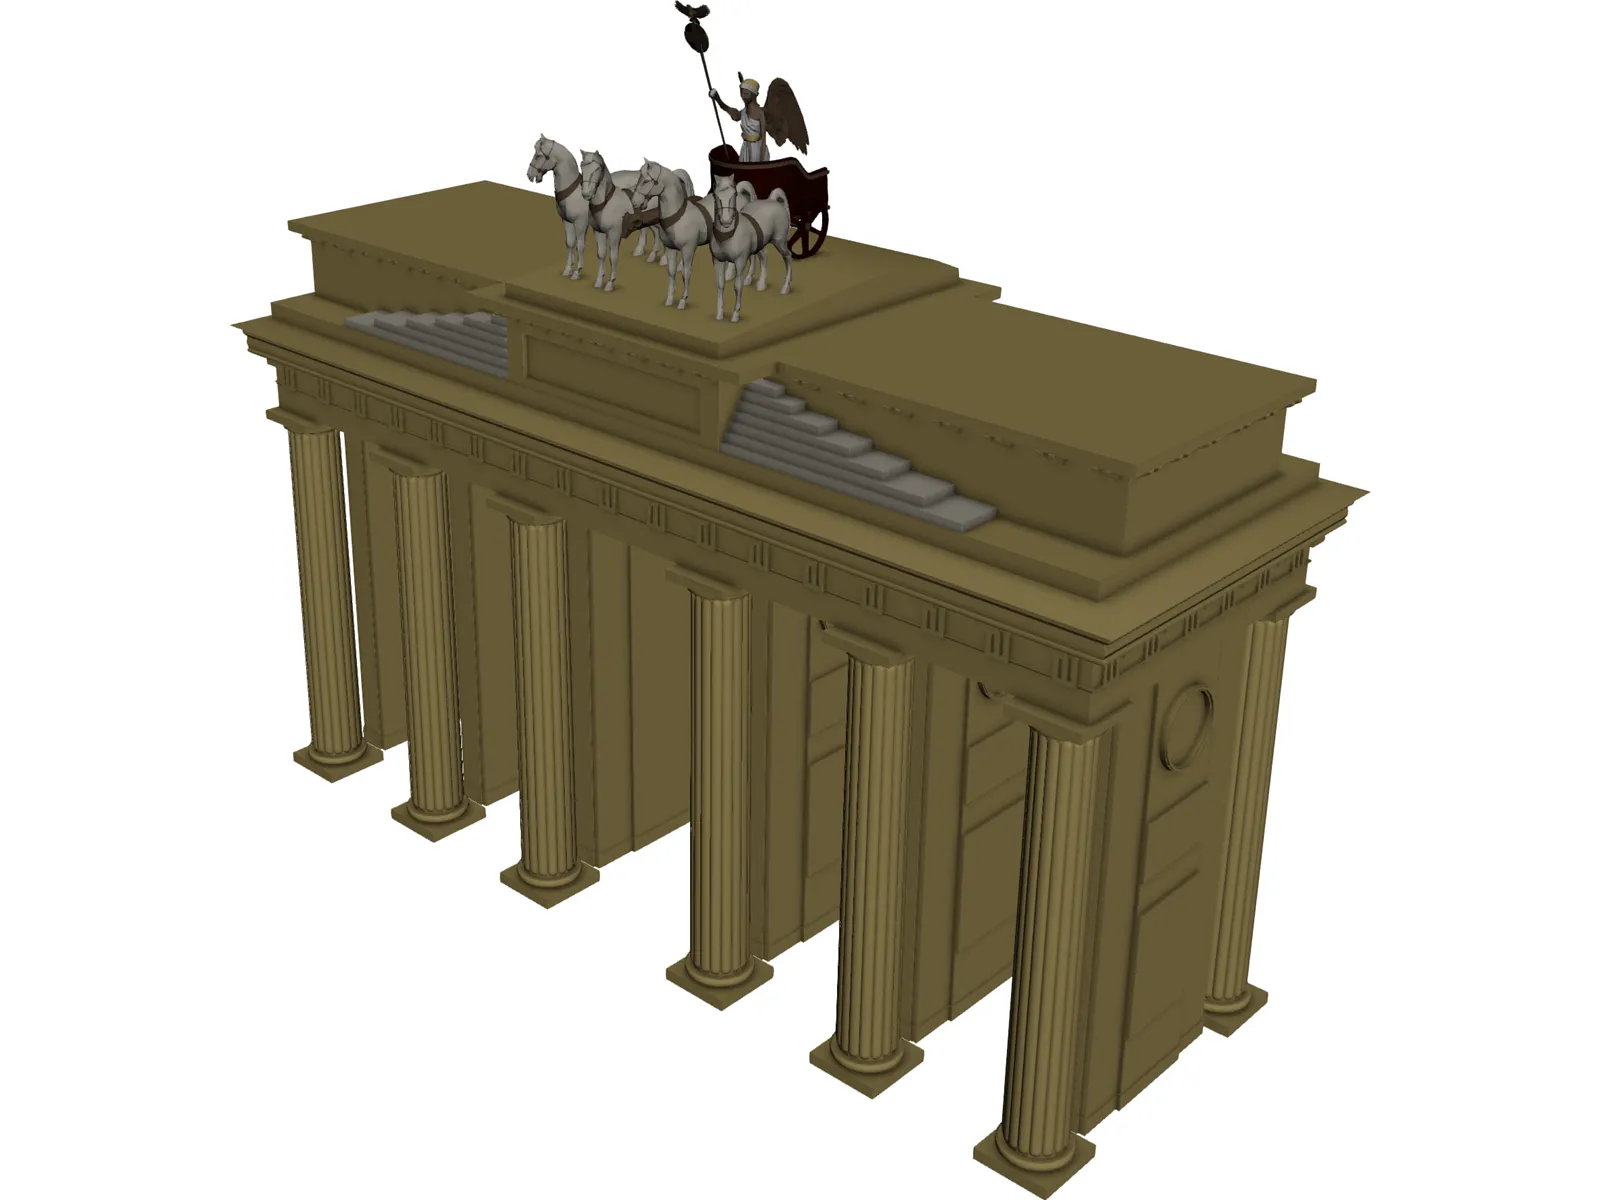 Brandenburg Gate Berlin 3D Model - 3DCADBrowser